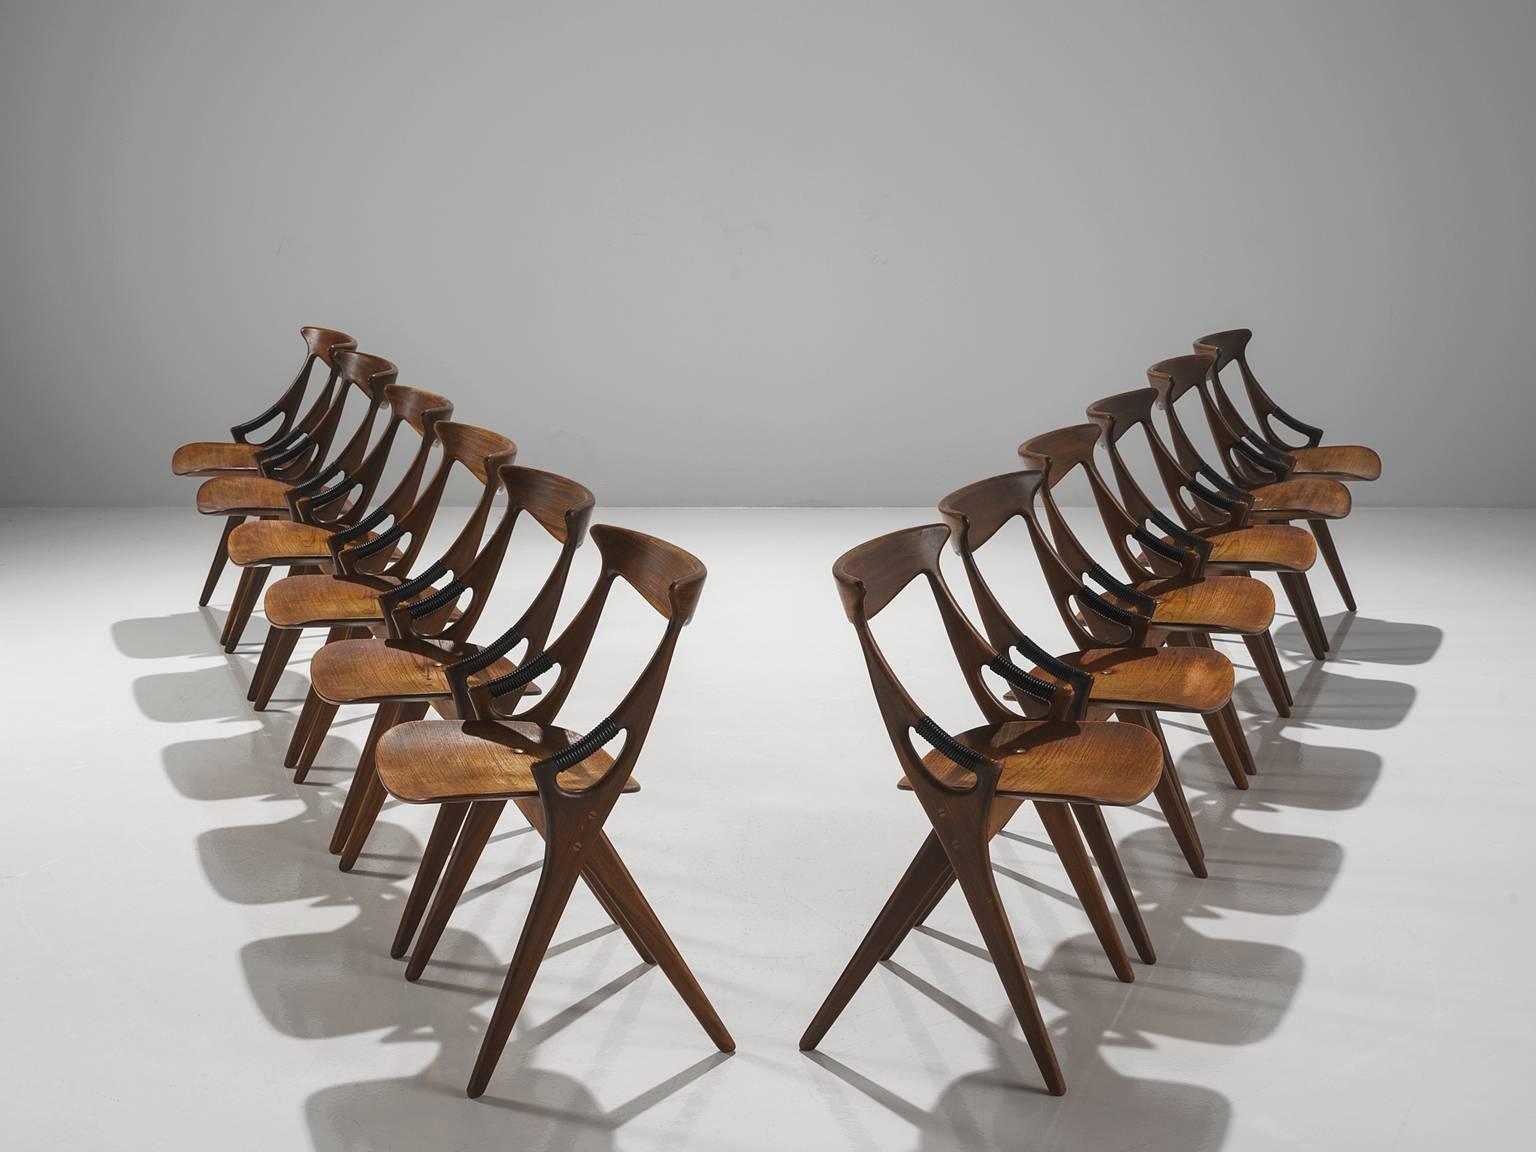 Arne Hovmand-Olsen for Mogens Kold Møbelfabrik, set of 12 dining chairs model 71, teak, Denmark, 1959.

This sculptural set of eight dining chairs is designed by the Dane Arne Hovmand-Olsen for Mogens Kold Møbelfabrik are quintessentially Danish.